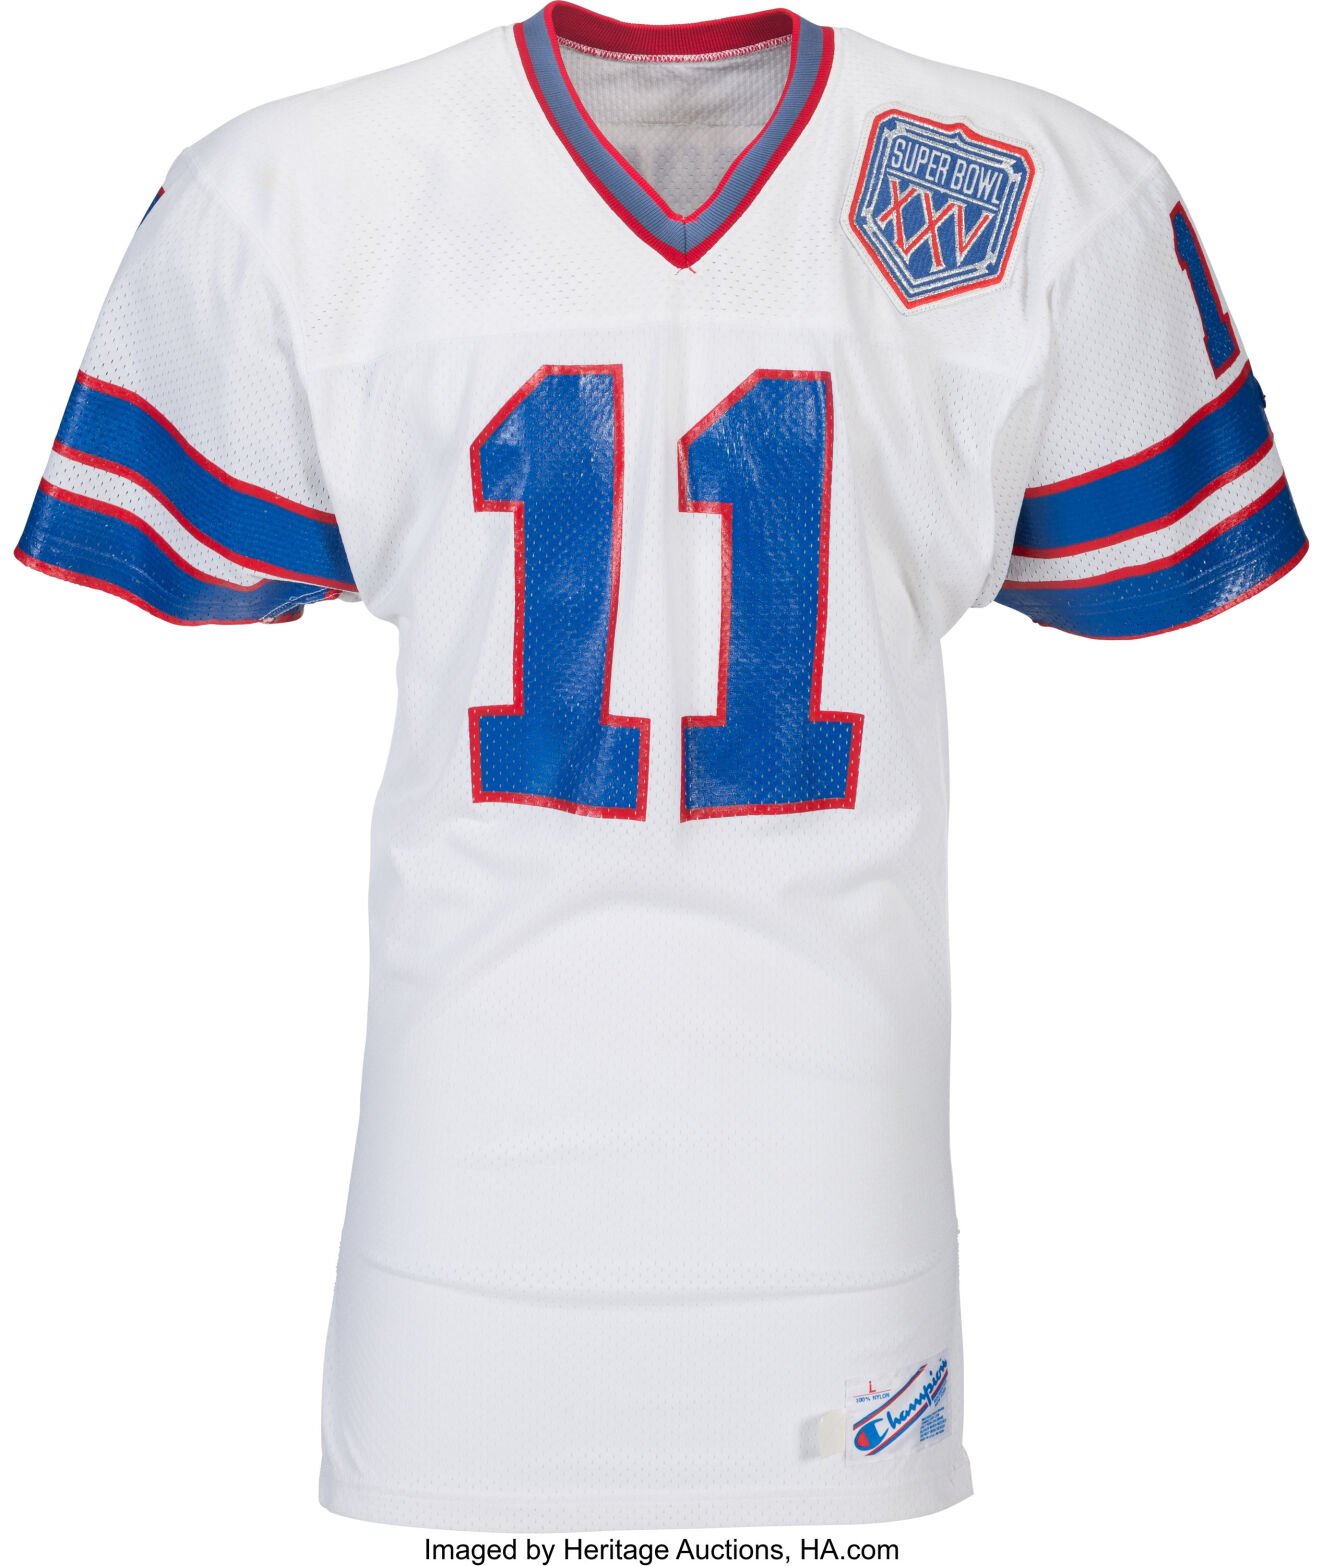 Bills kicker Scott Norwood's 'Wide Right' jersey sells for $52,800 ...